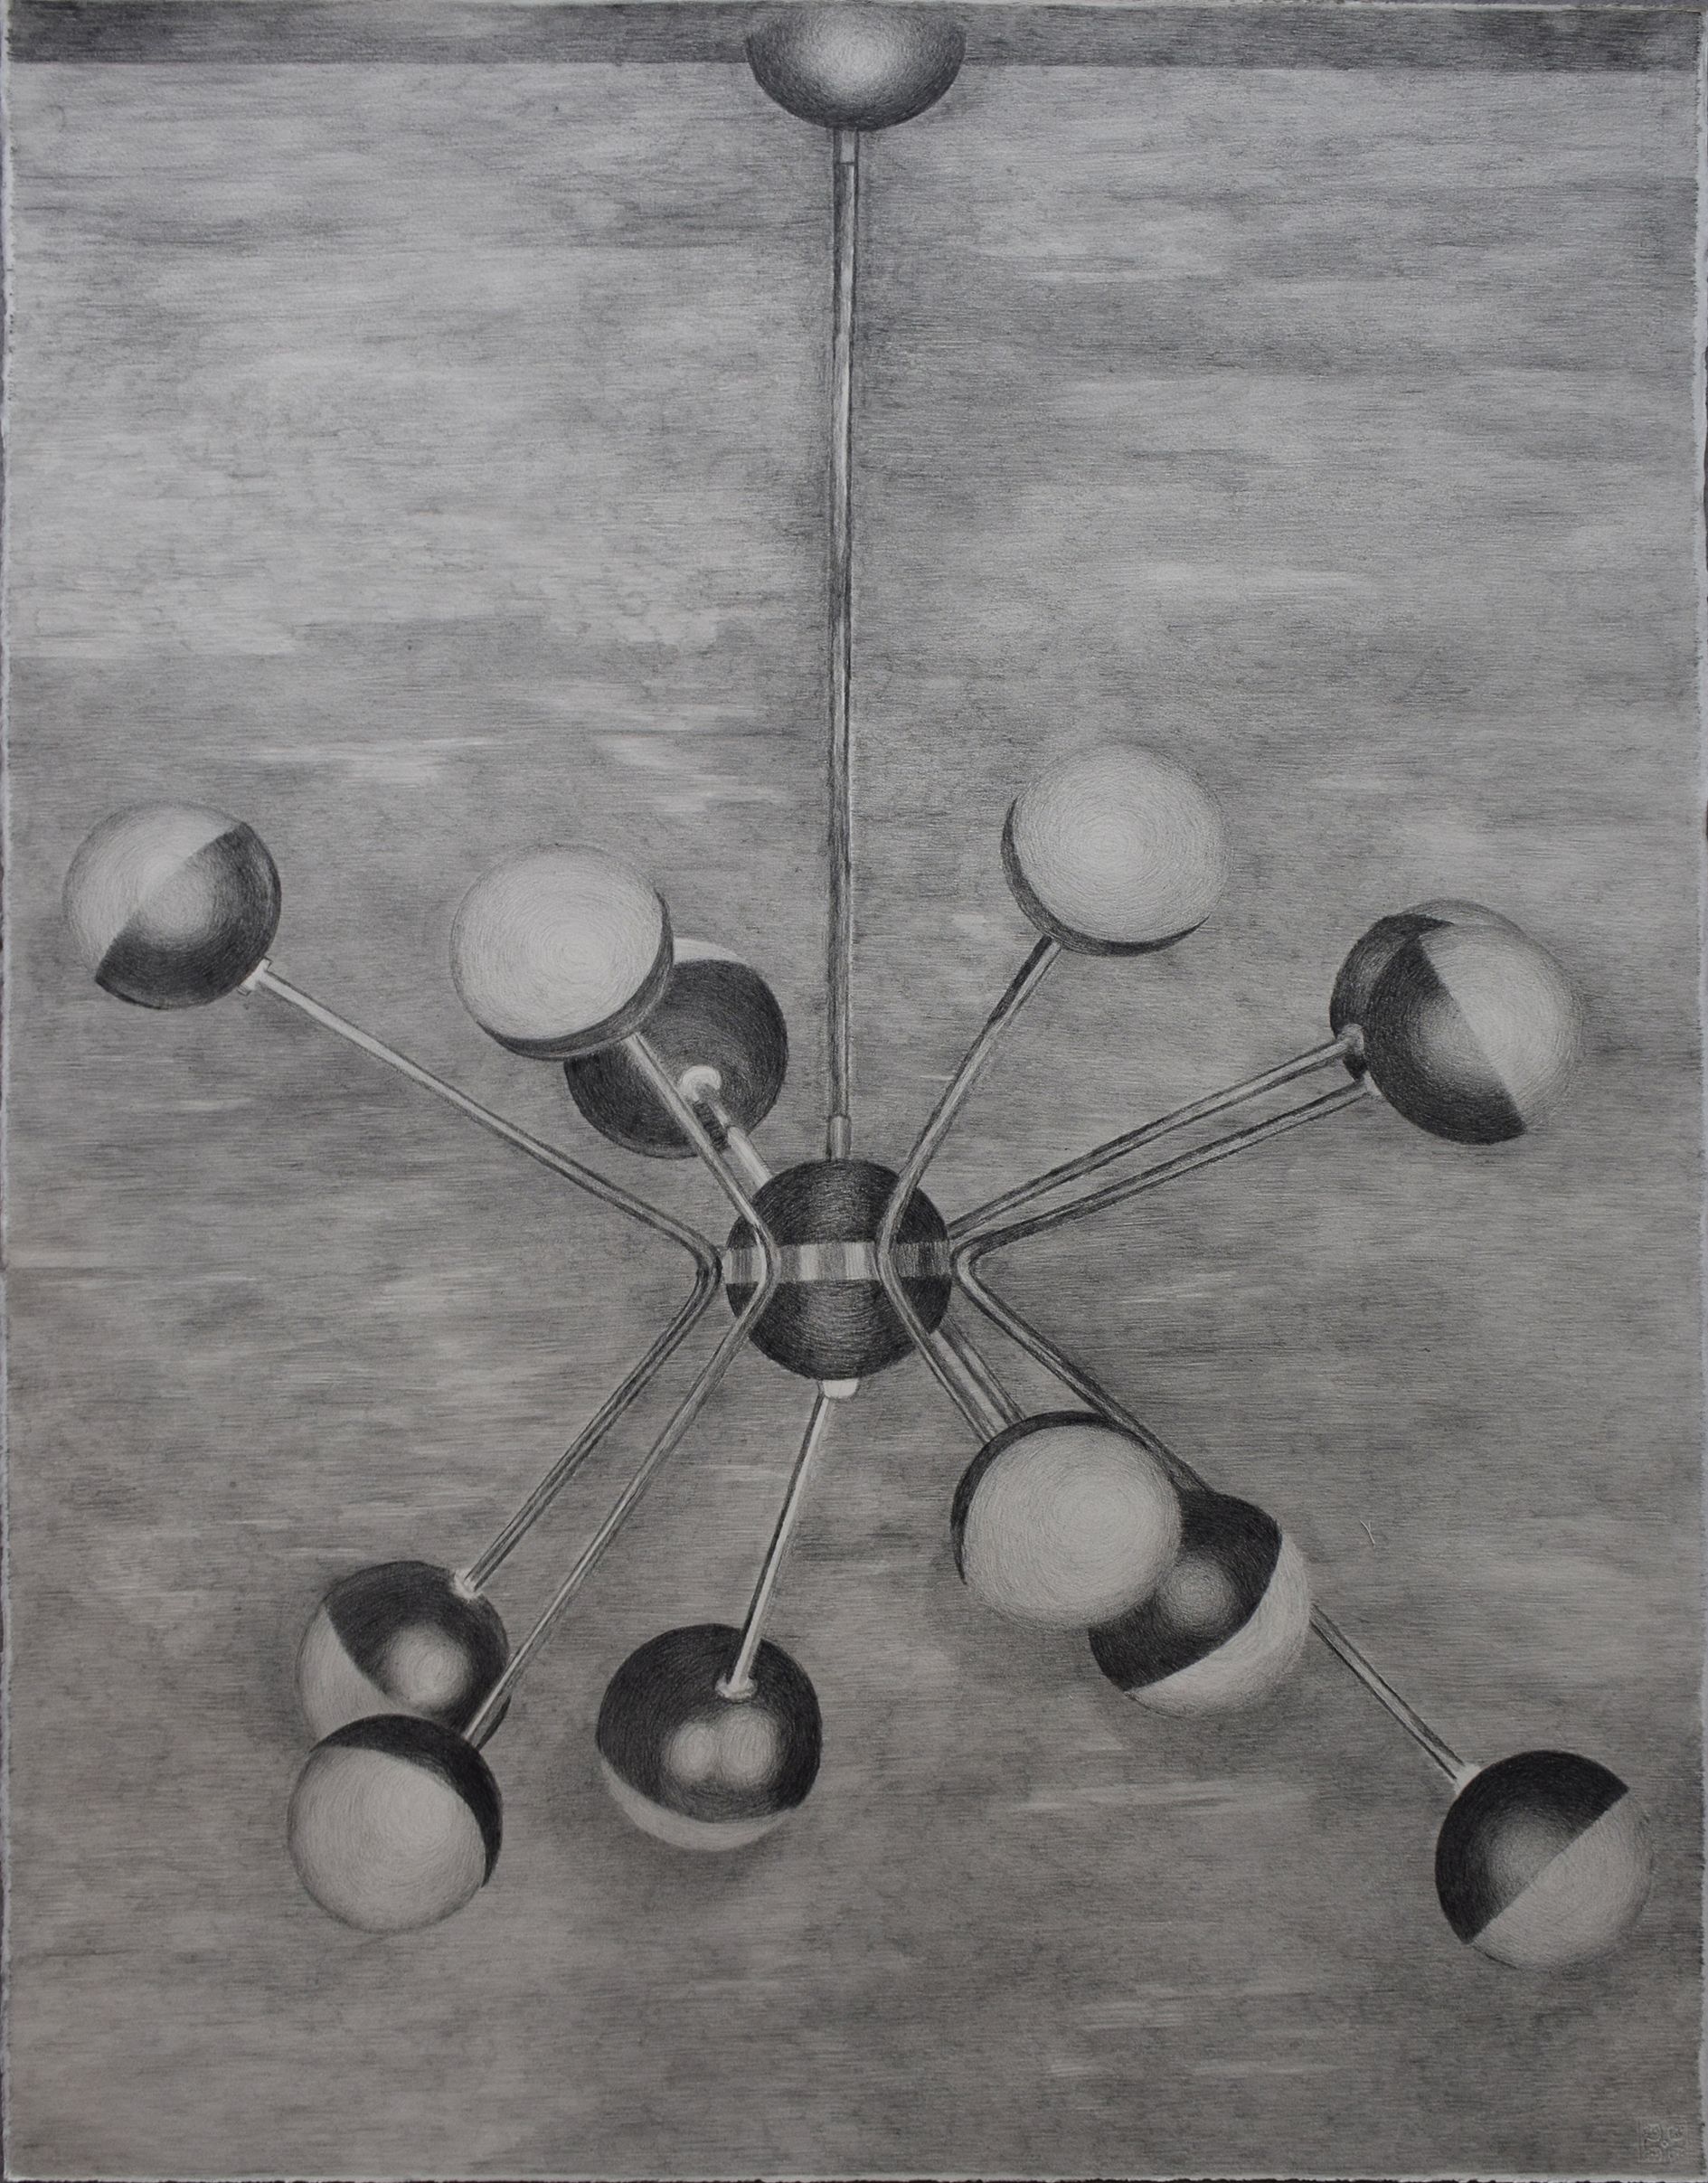 4.Natasa_Kokic_4. Model(Lamp), charcoal on paper, 56 x 76 cm, 2017